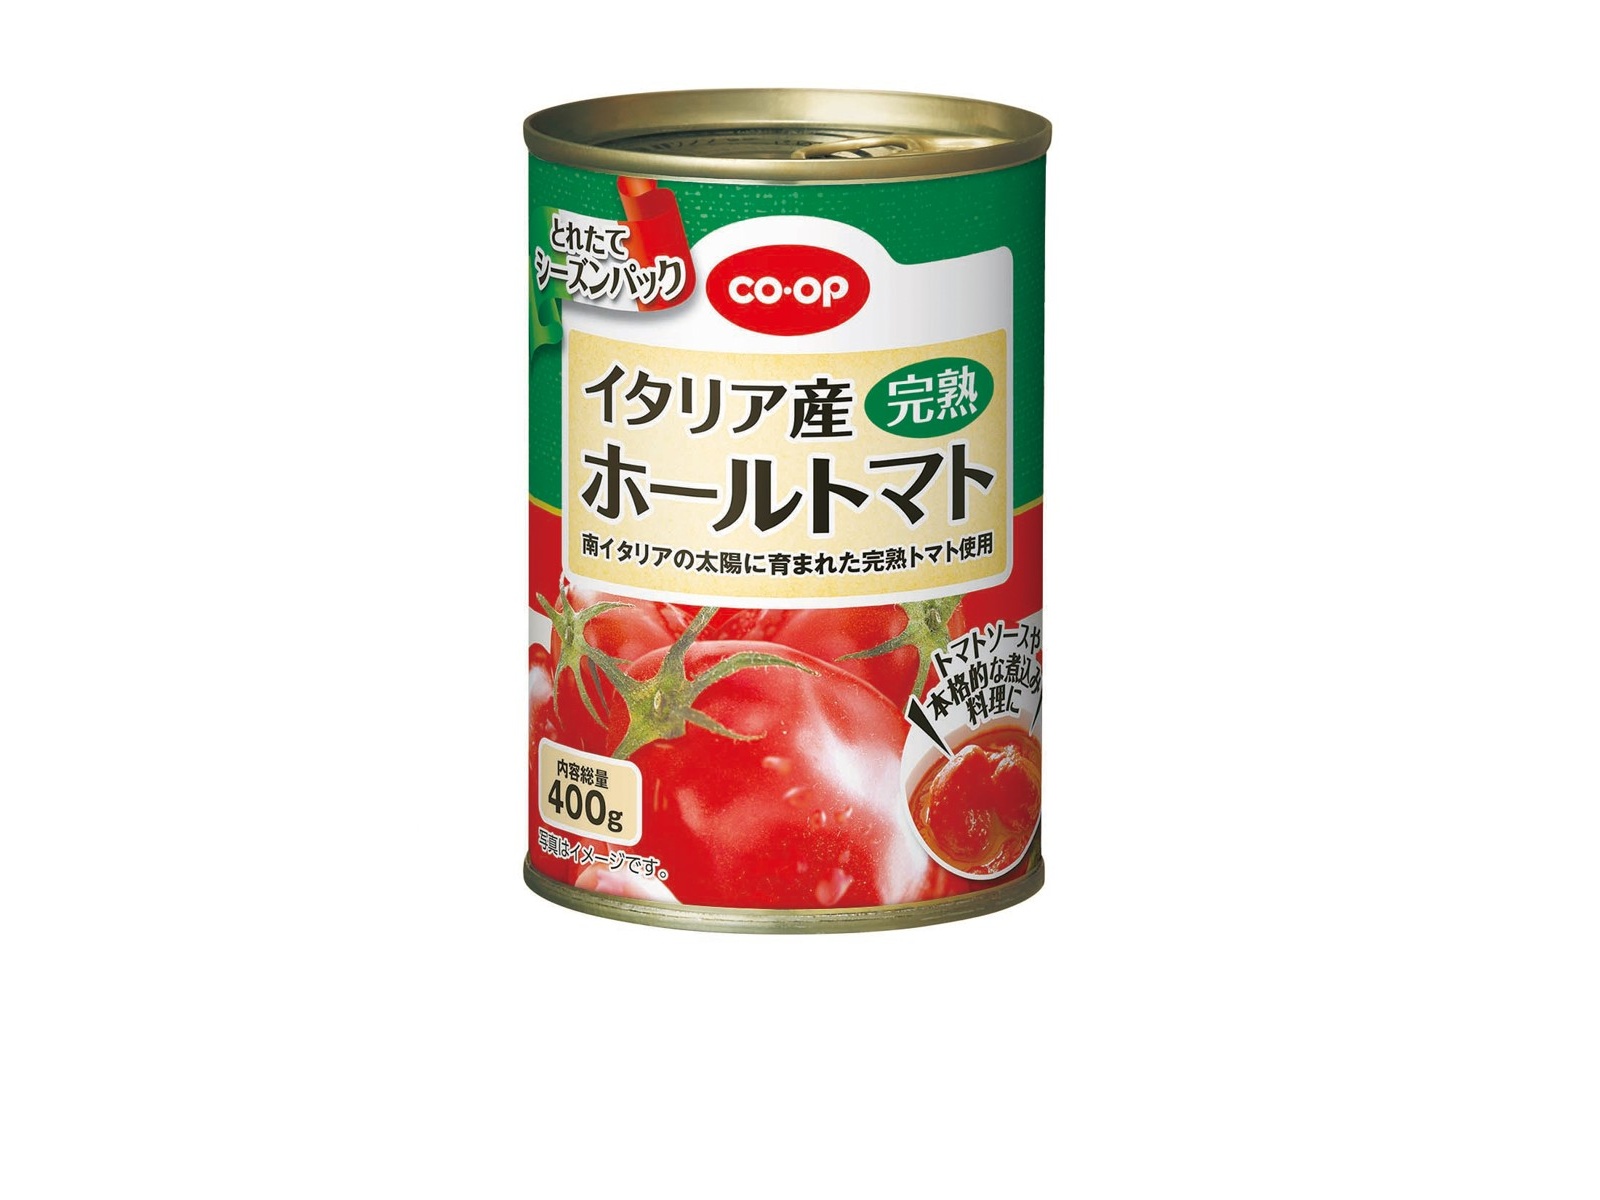 CO・OP イタリア産完熟ホールトマト 400g| コープこうべネット